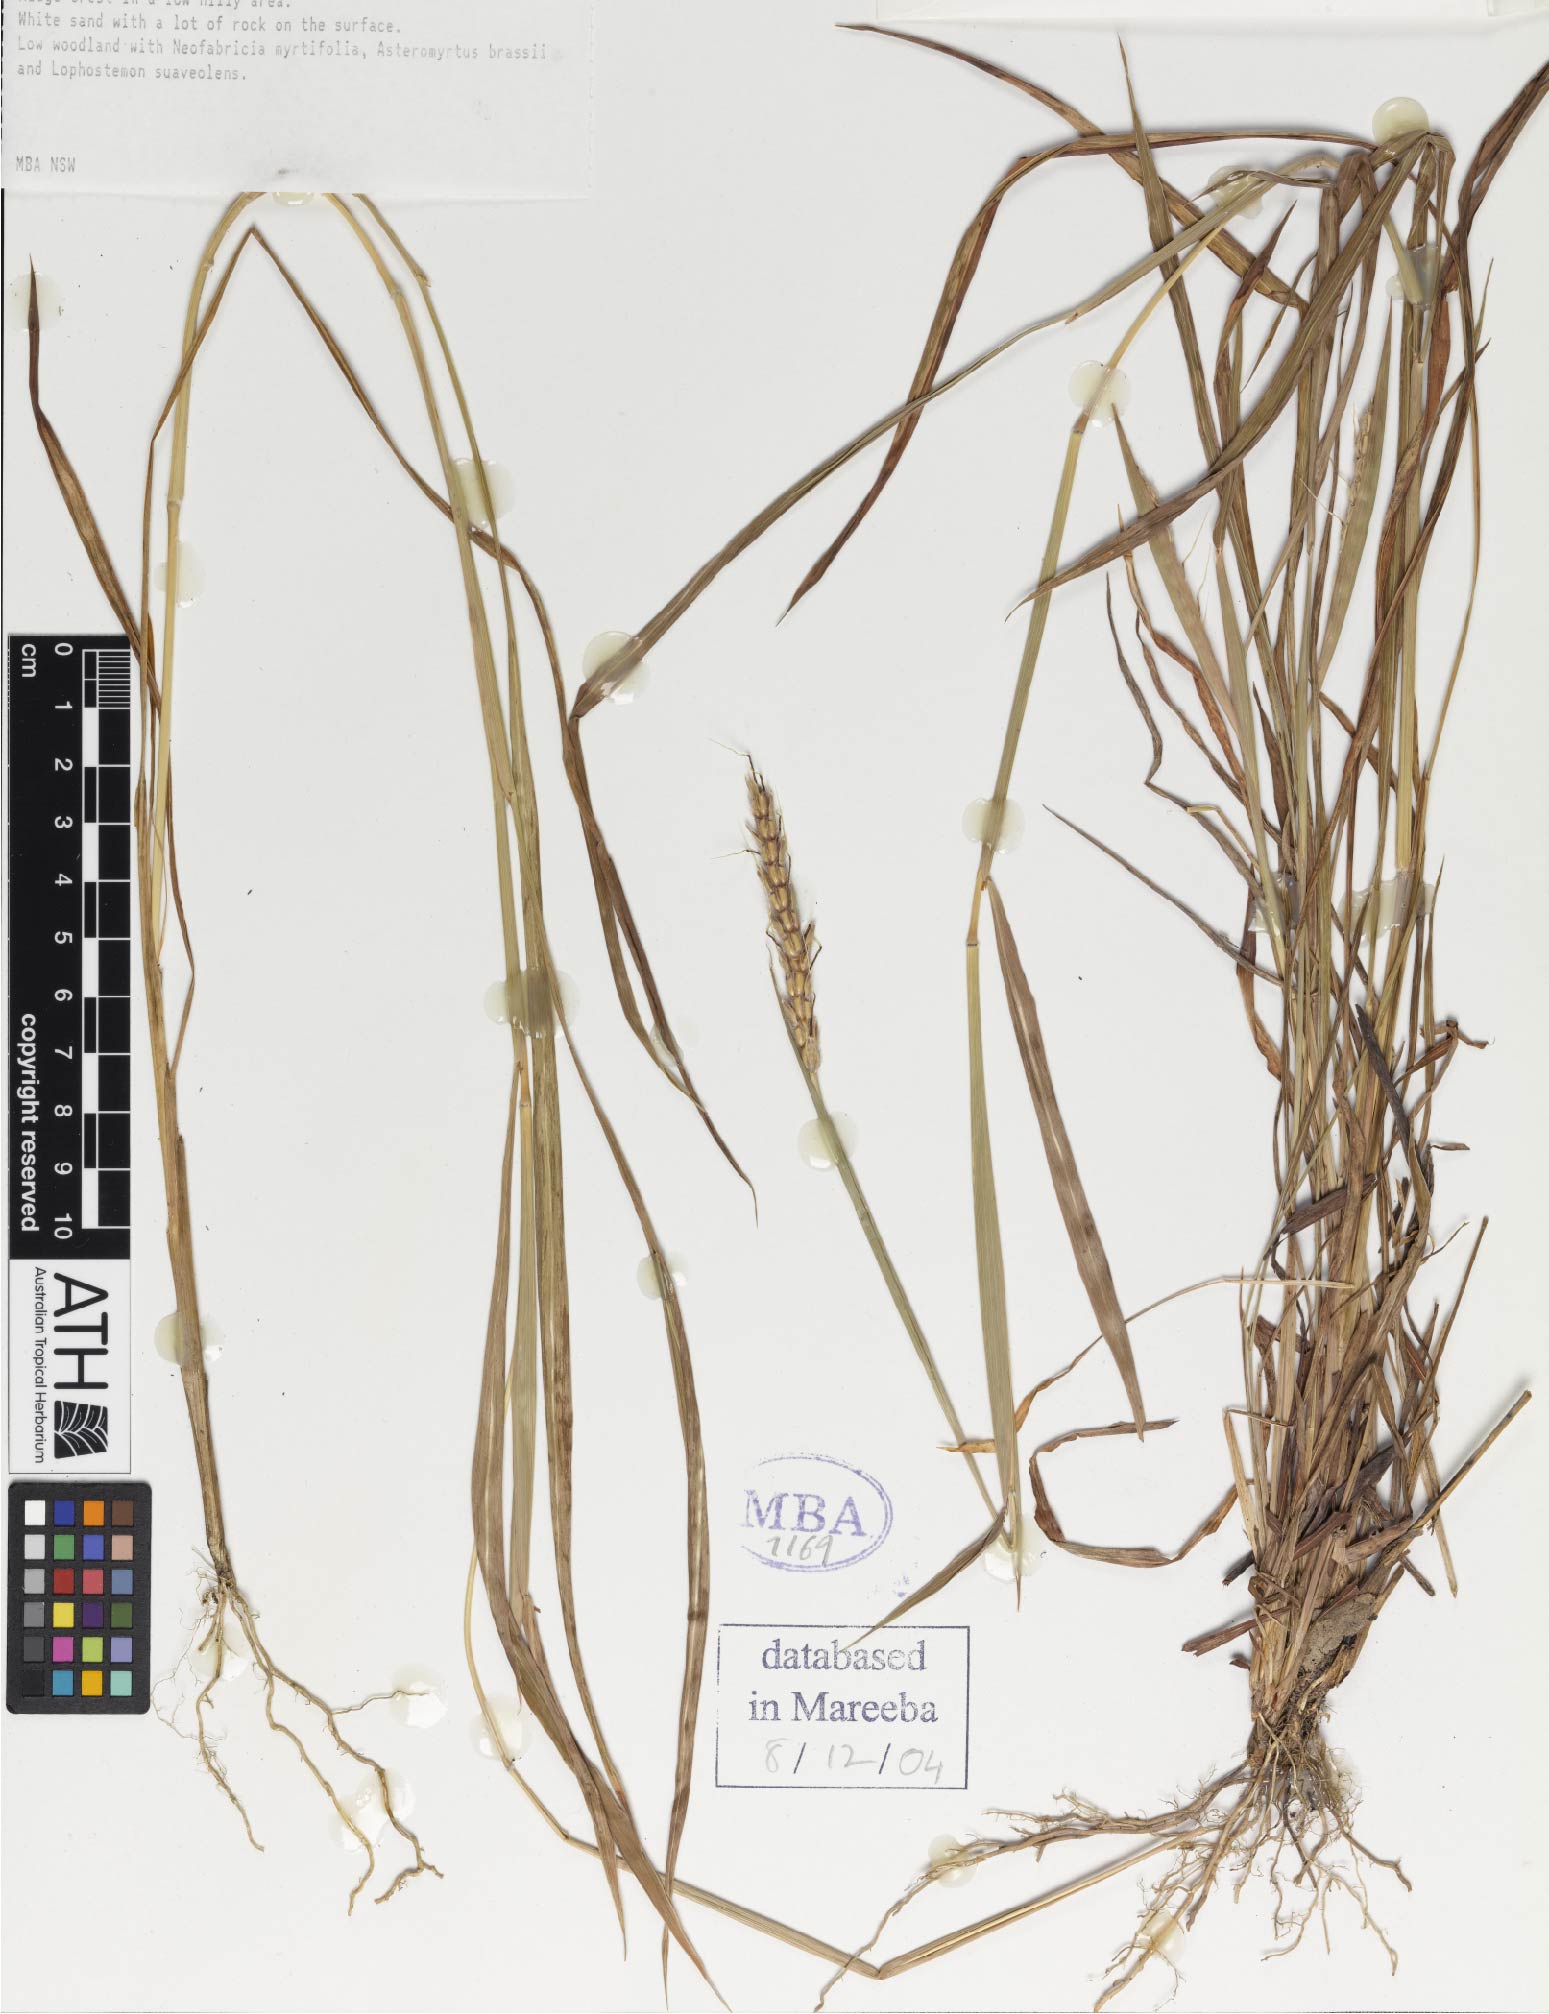 Fig. 1. Herbarium sheet of Ischaemum fragile (MBA7169)